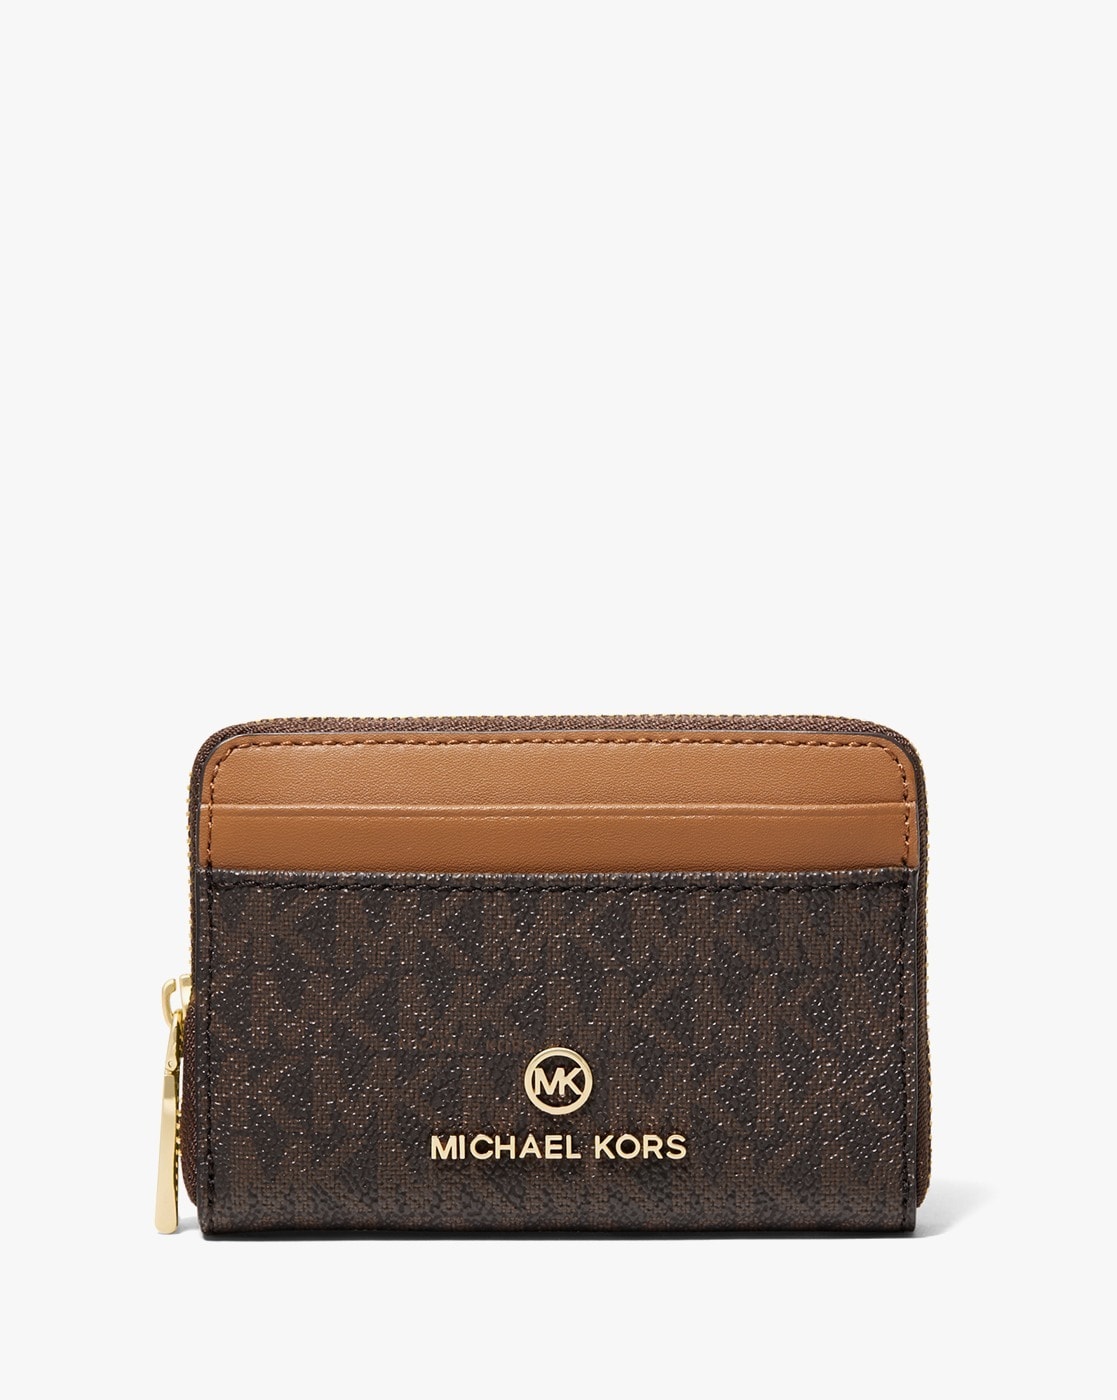 Michael Kors MK Logo Small Zip around Wallet in Brown